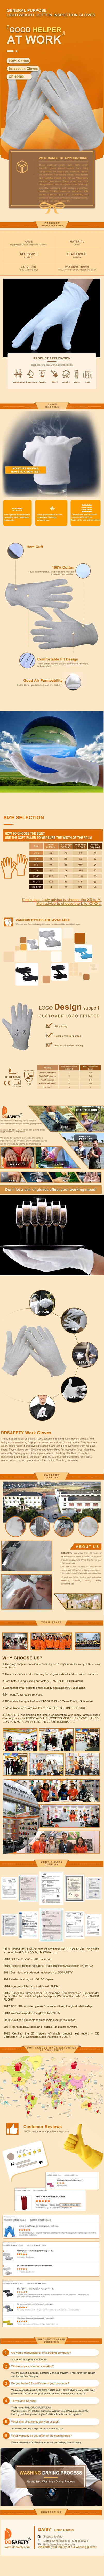 100% Cotton Gloves - Cotton Inspection Gloves - DCH102 100% Cotton Gloves - Cotton Inspection Gloves - DCH102 gloves,cotton gloves,Cotton Inspection Gloves,Inspection Gloves